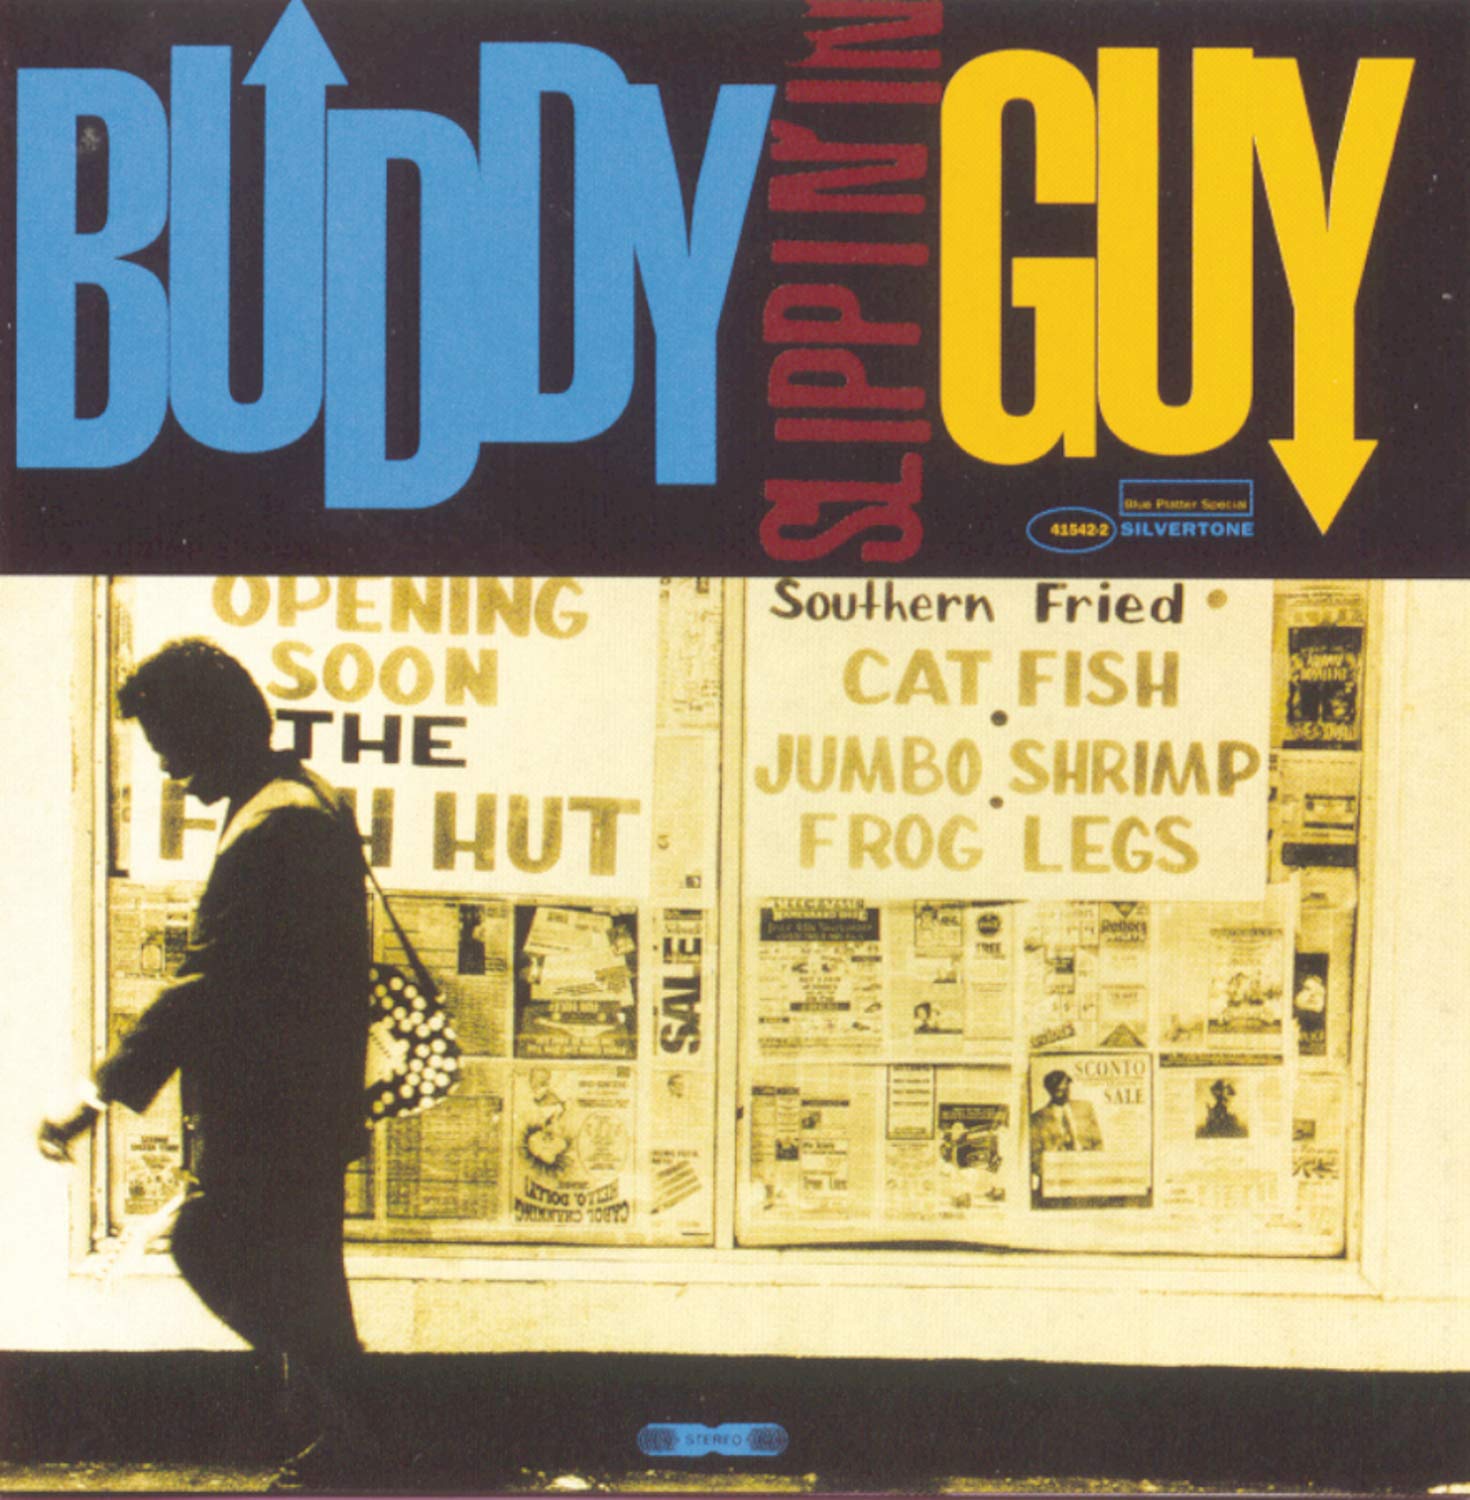 Buddy Guy- Slippin' In - DarksideRecords